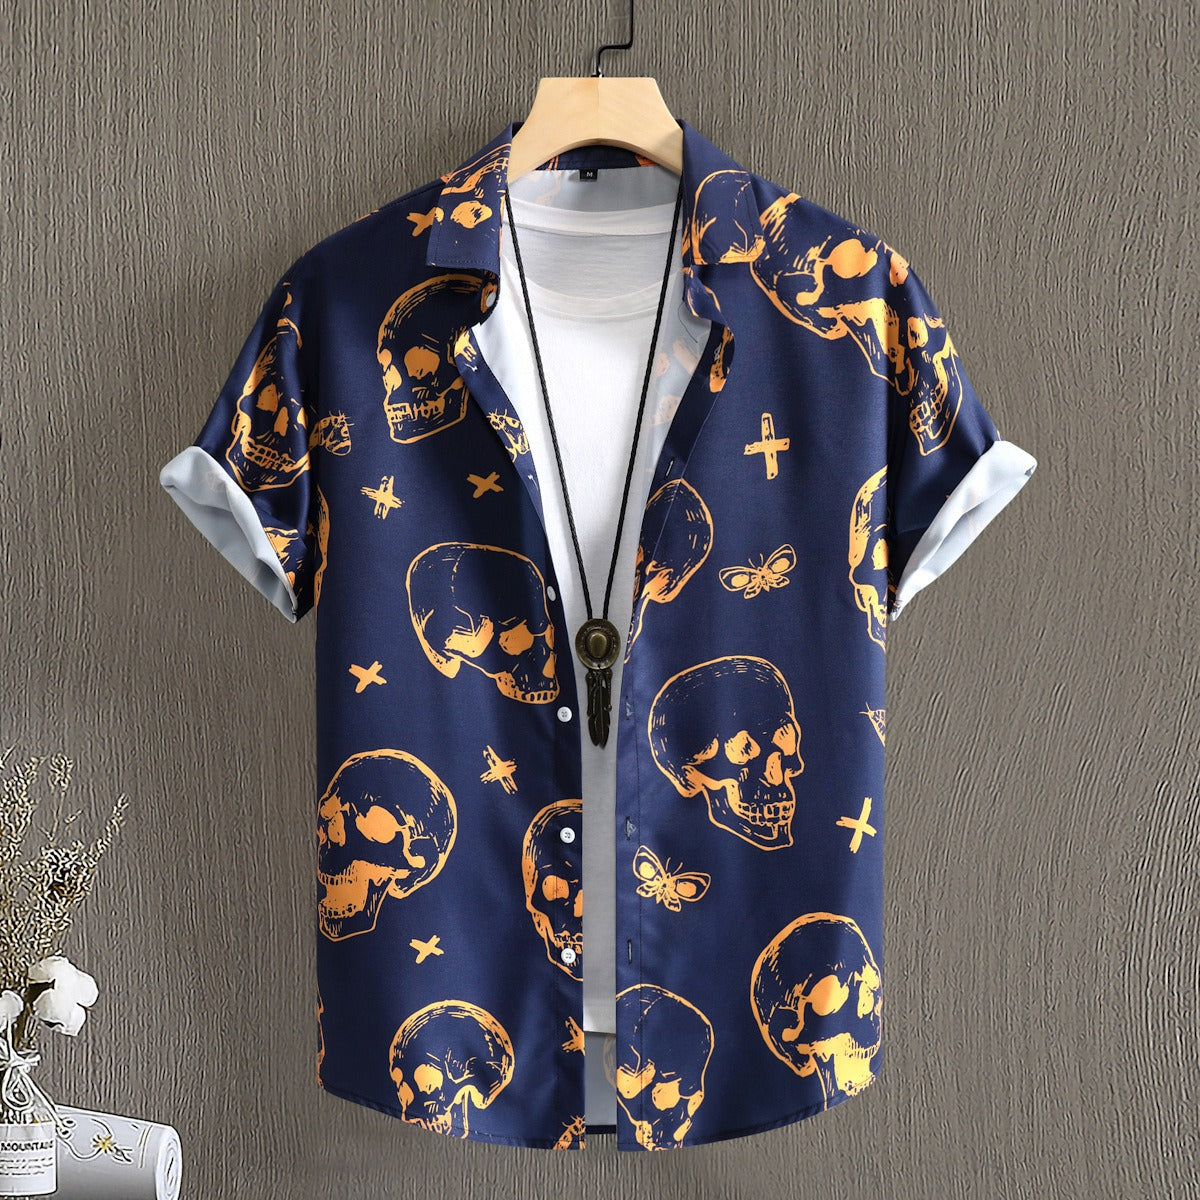 Men's shirt casual loose fit men's navy skull digital printed short sleeved shirt